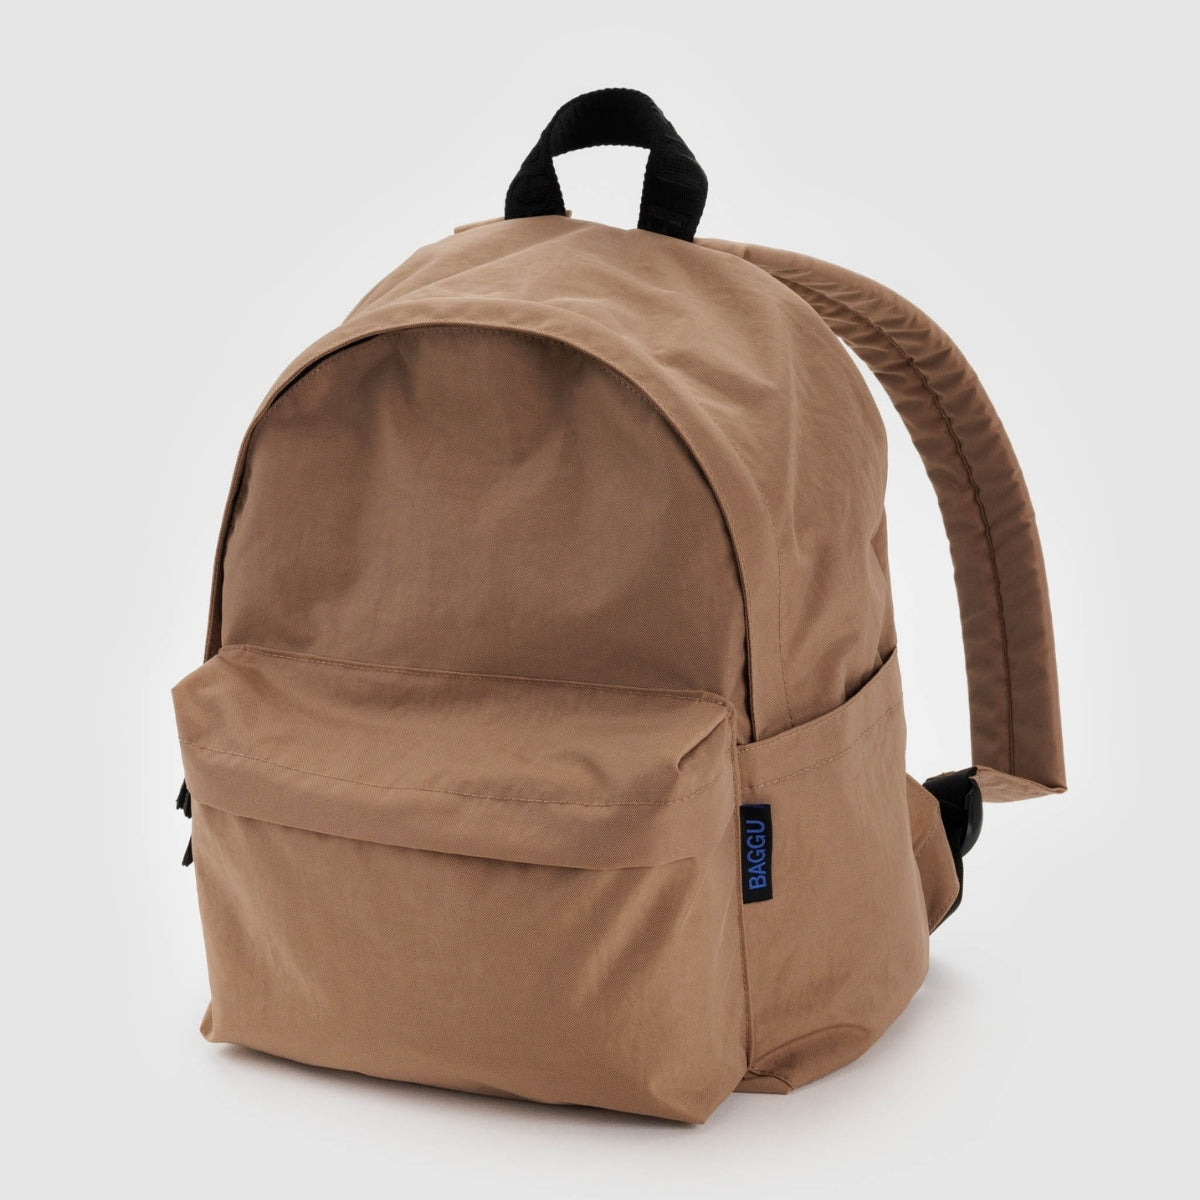 Baggu Medium Nylon Backpack